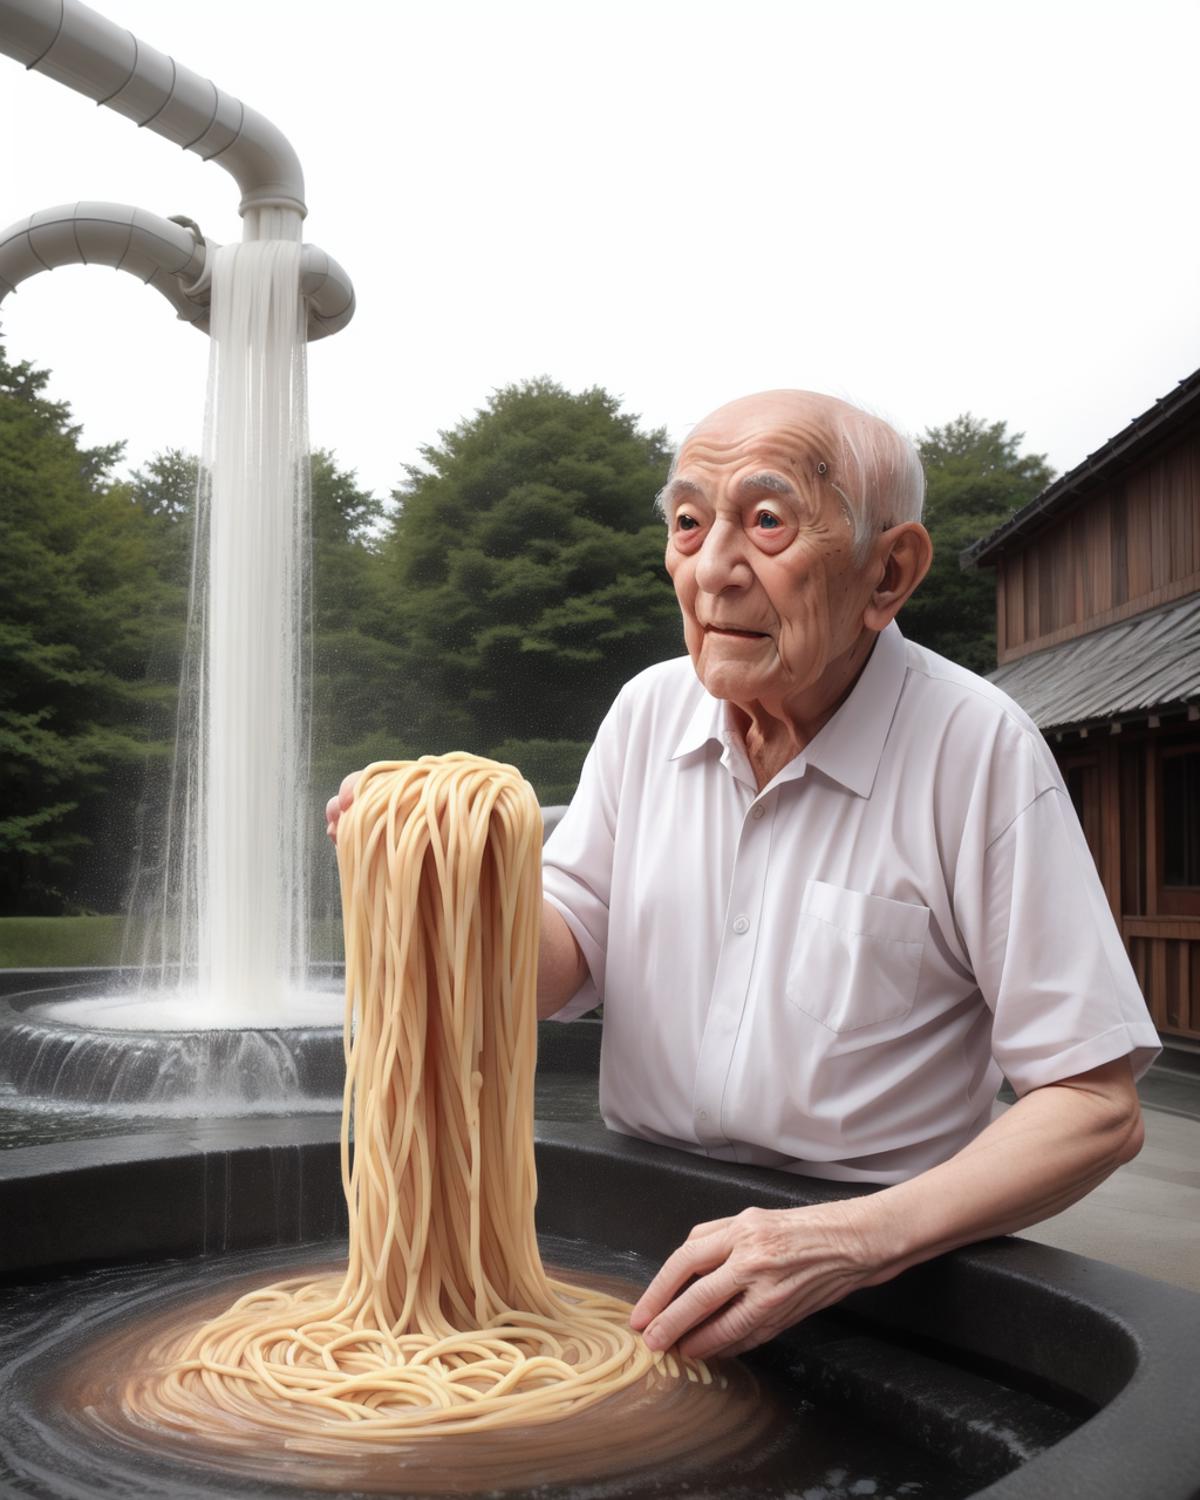 spaghetti and soumen slider image by Liquidn2